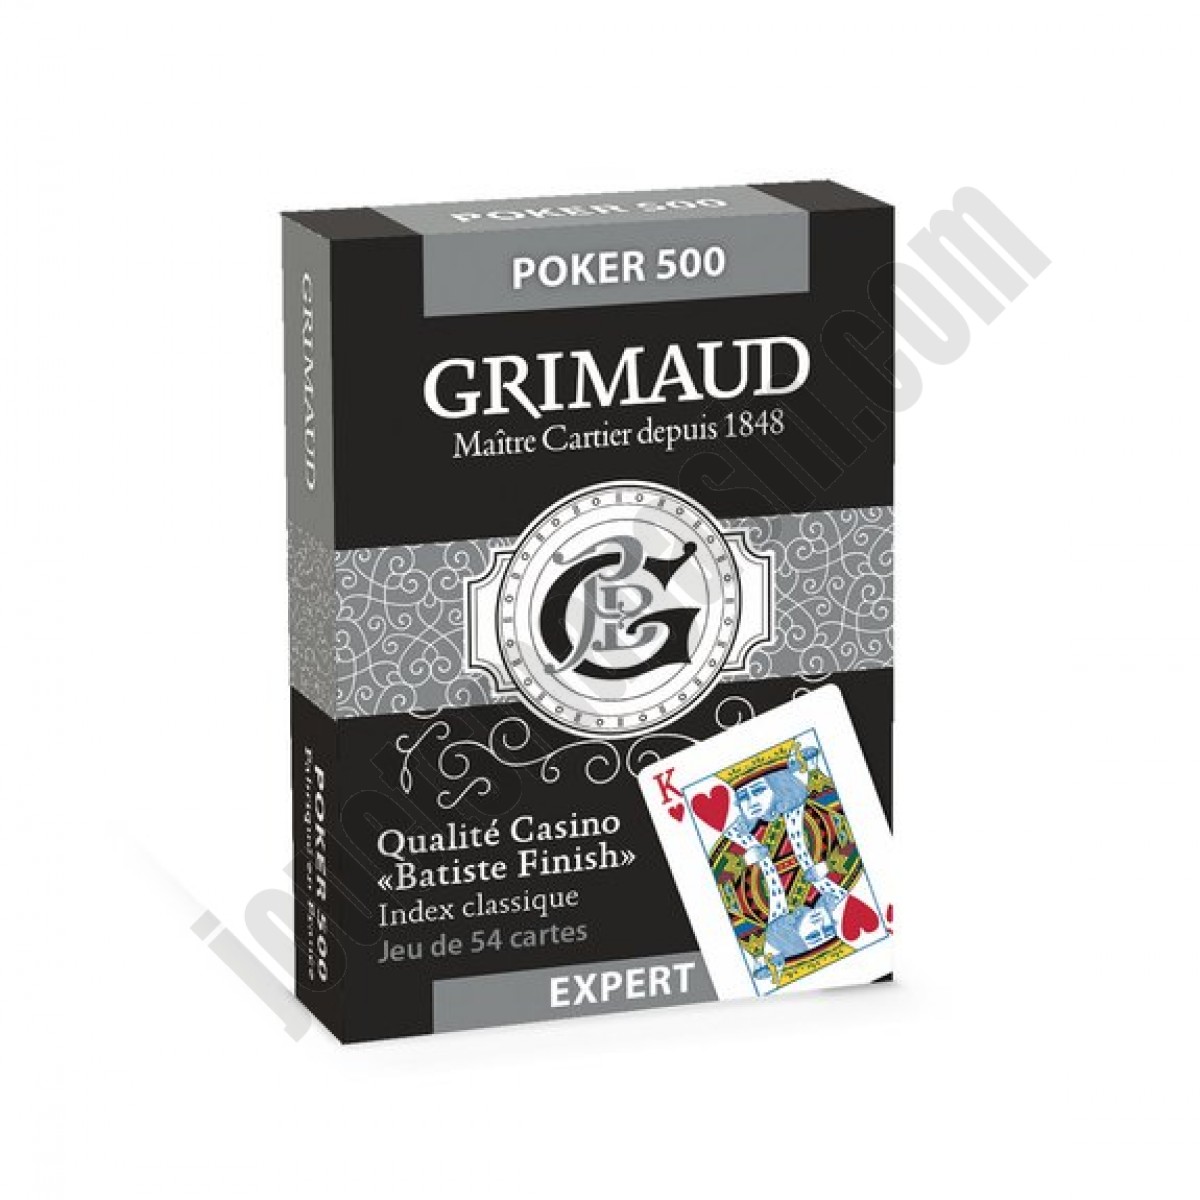 Grimaud Expert Poker 500 Format US Index Classique En promotion - Grimaud Expert Poker 500 Format US Index Classique En promotion